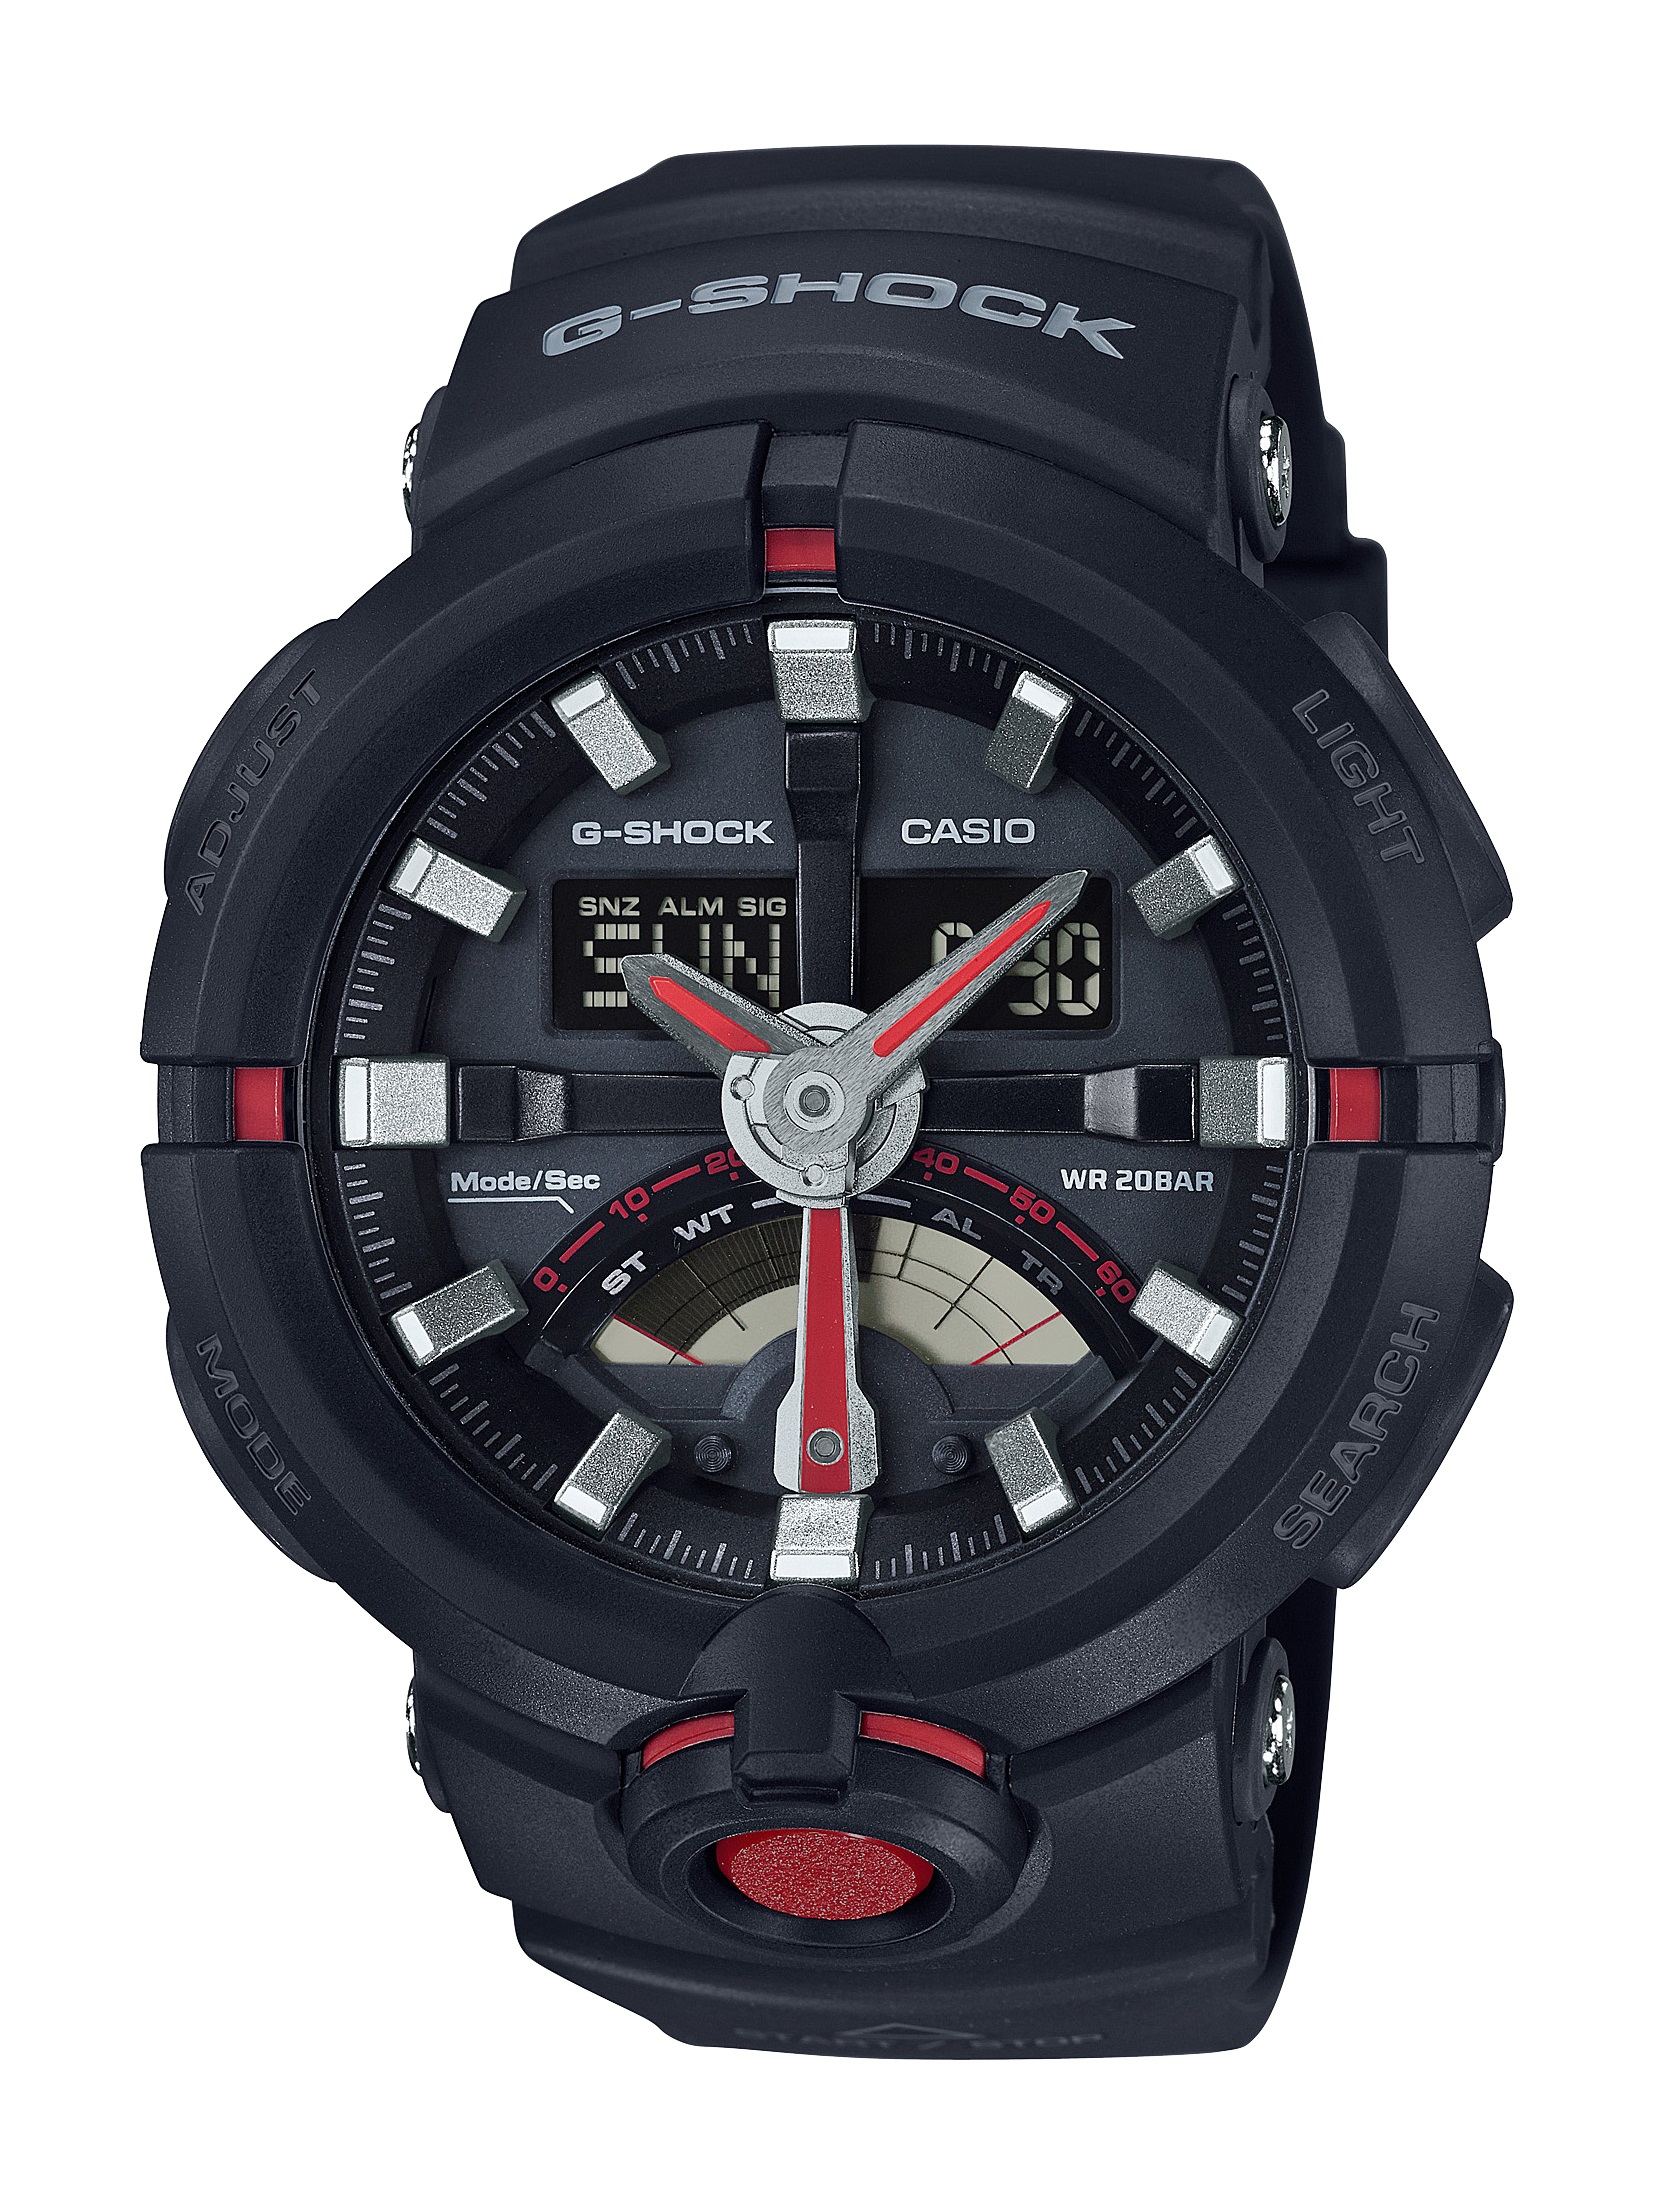 G-Shock Watches by Casio - Mens Watches - Digital Watches